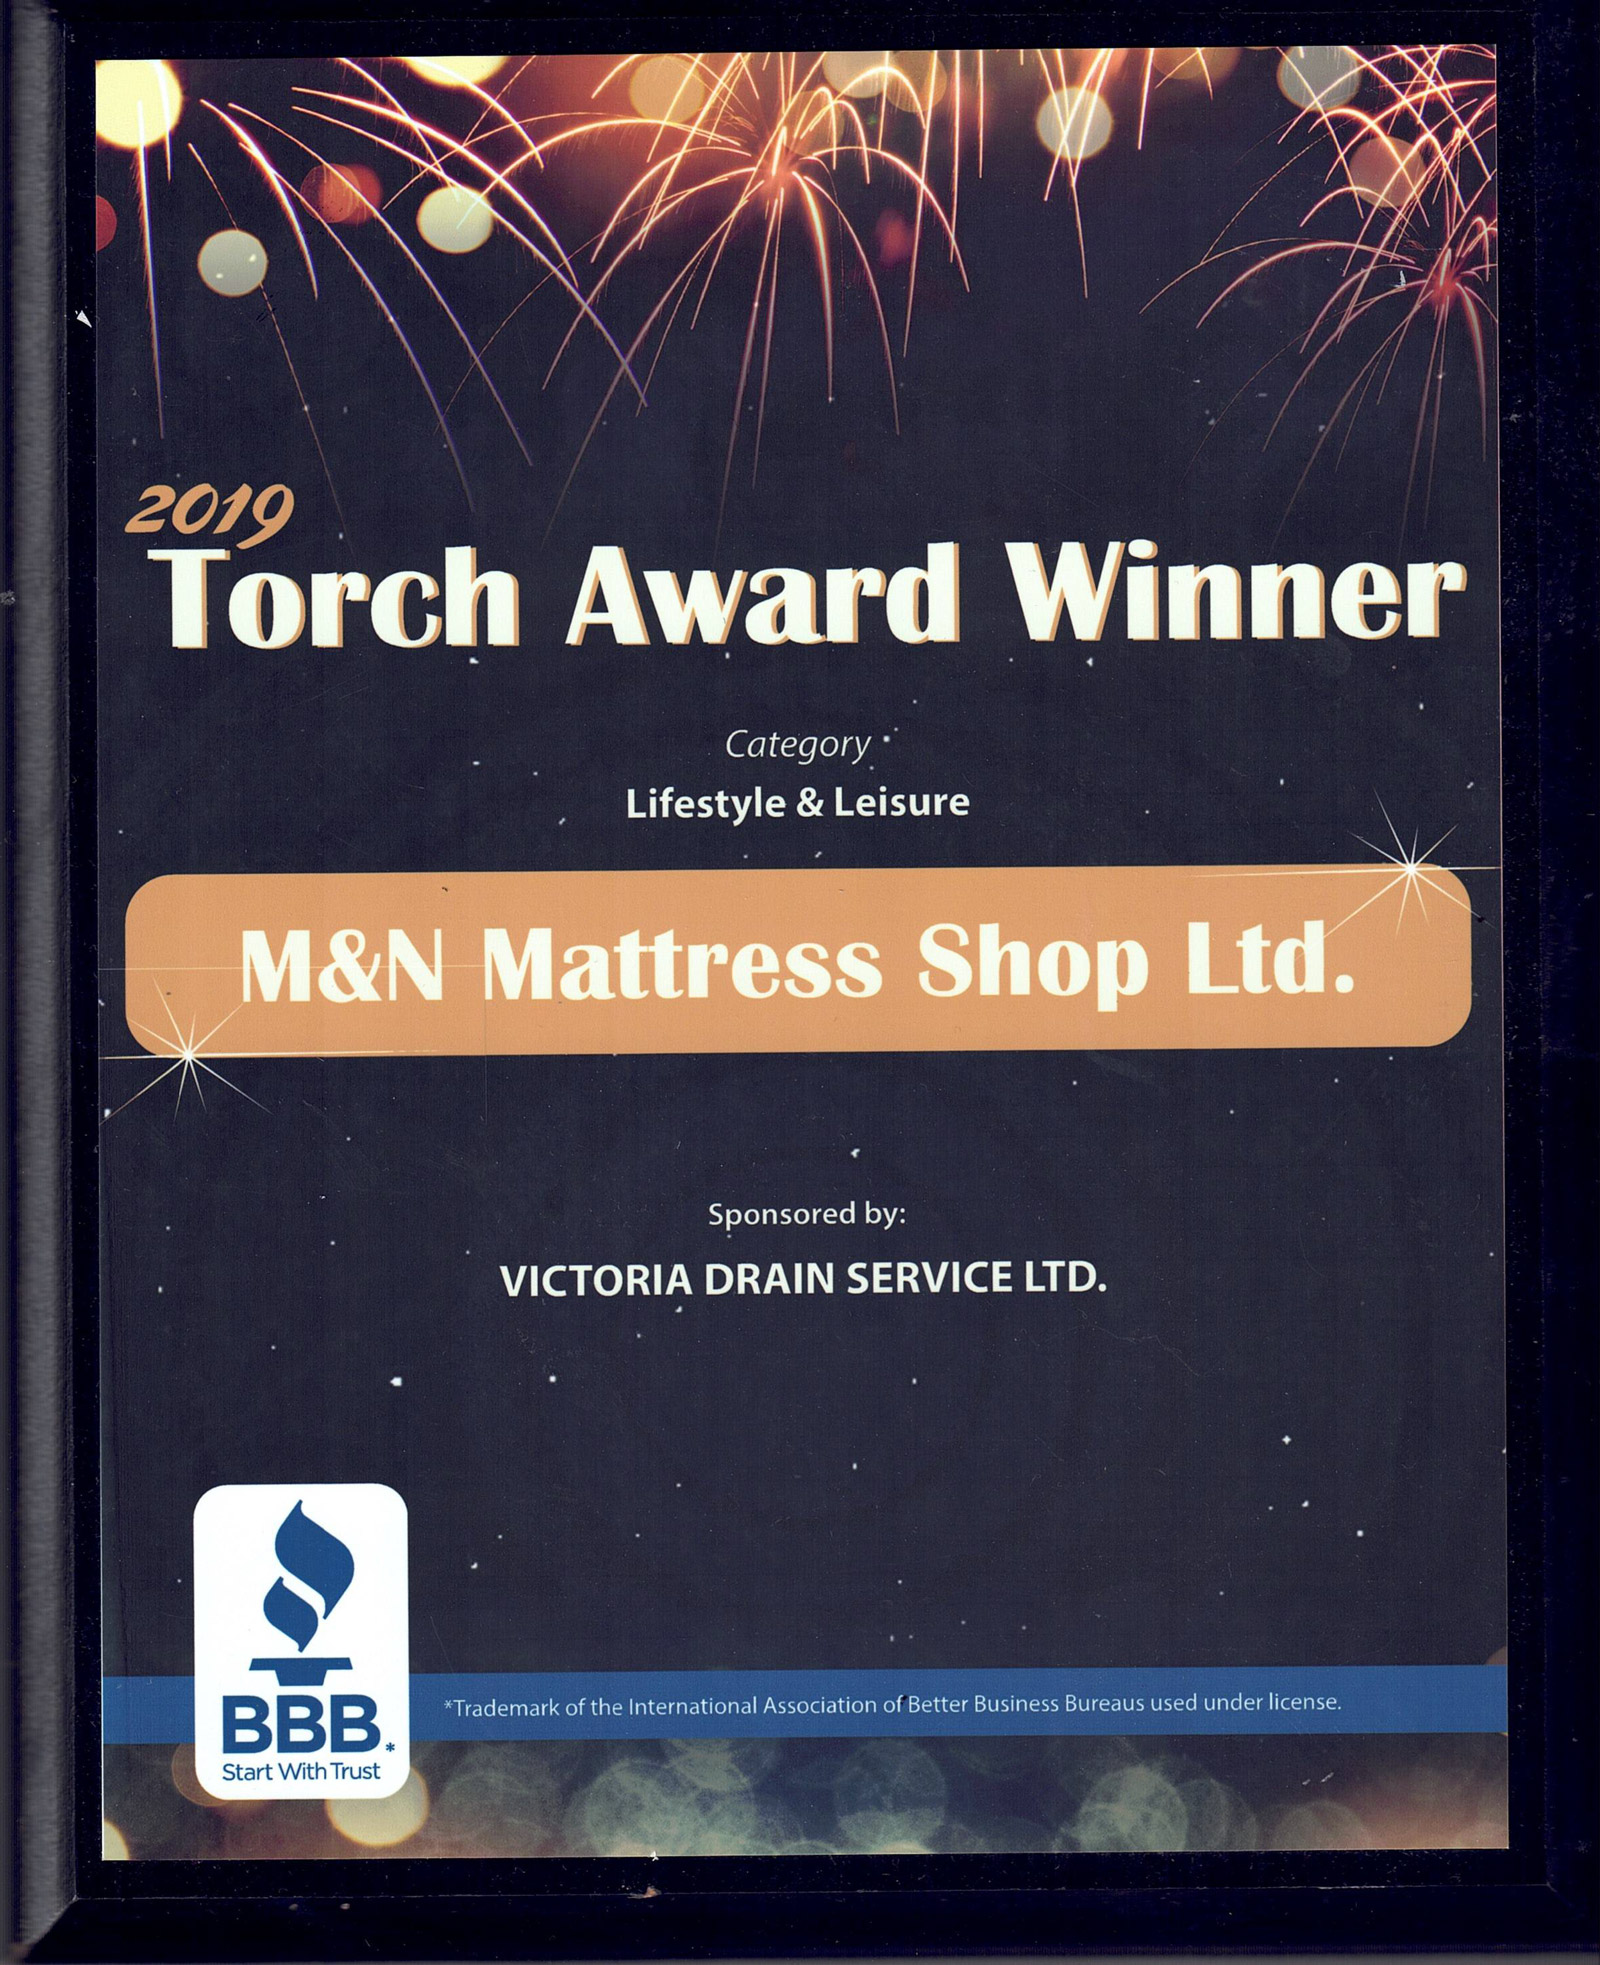 Torch Award Winner